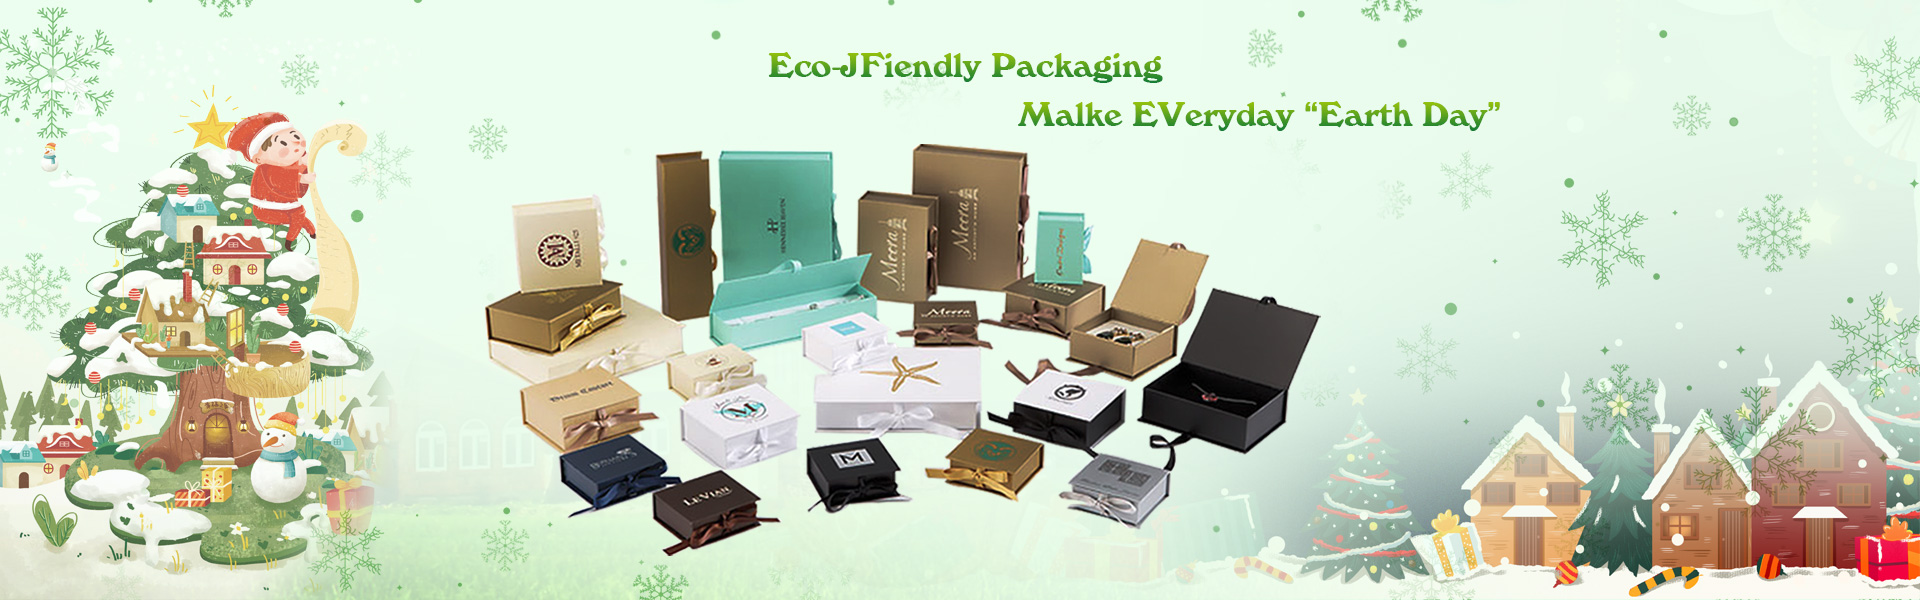 Gavekasse, pakkekasse, etiket,Dongguan chengyuan packaging products Co,.Ltd